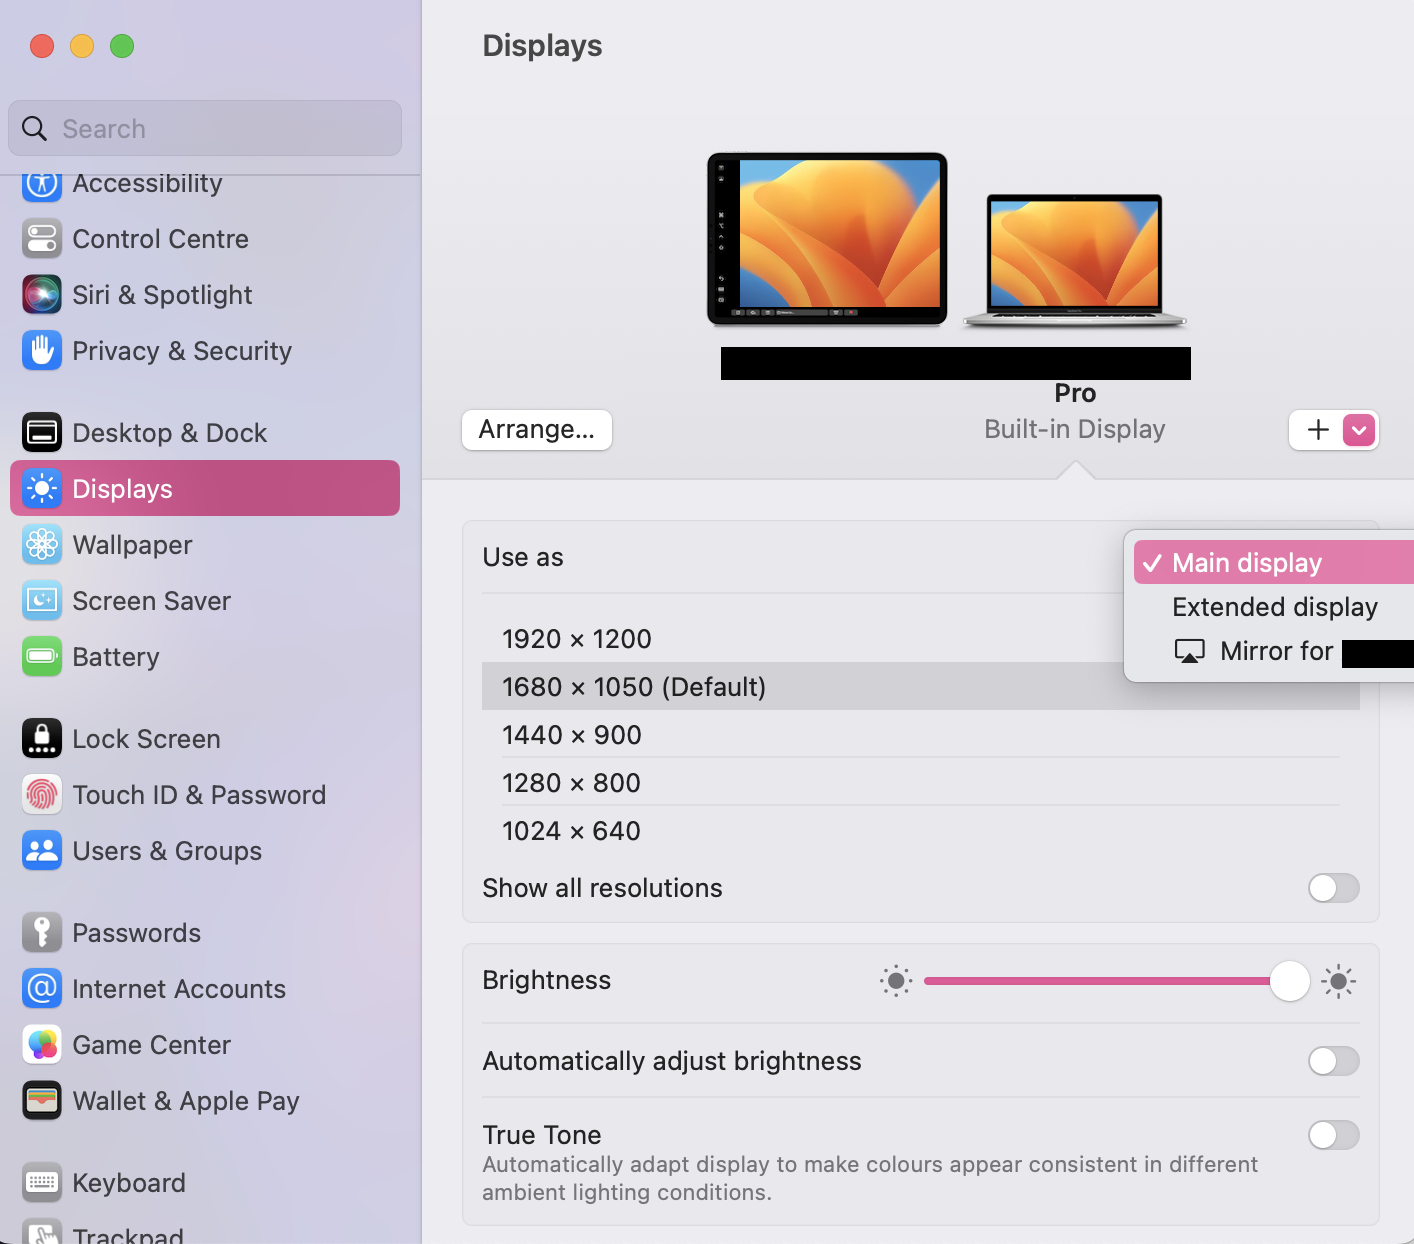 Mac “Displays” option